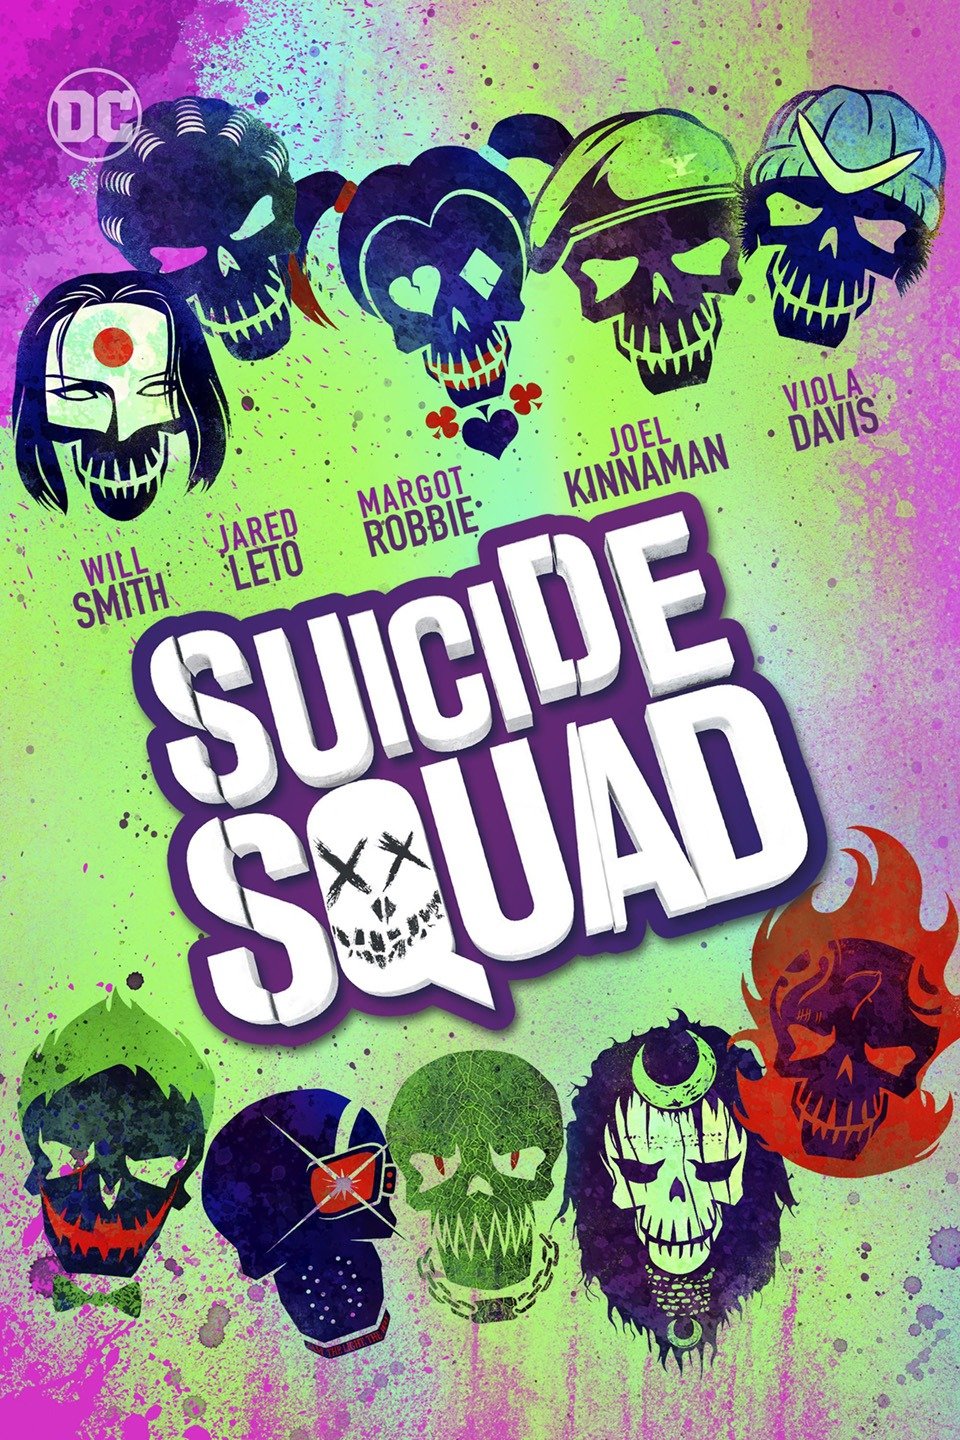 [MINI Super-HQ] Suicide Squad (2016) ทีมพลีชีพ มหาวายร้าย [1080p] [พากย์ไทย 5.1 + เสียงอังกฤษ DTS] [บรรยายไทย + อังกฤษ] [เสียงไทย + ซับไทย] [Theatrical Cut] [OPENLOAD]